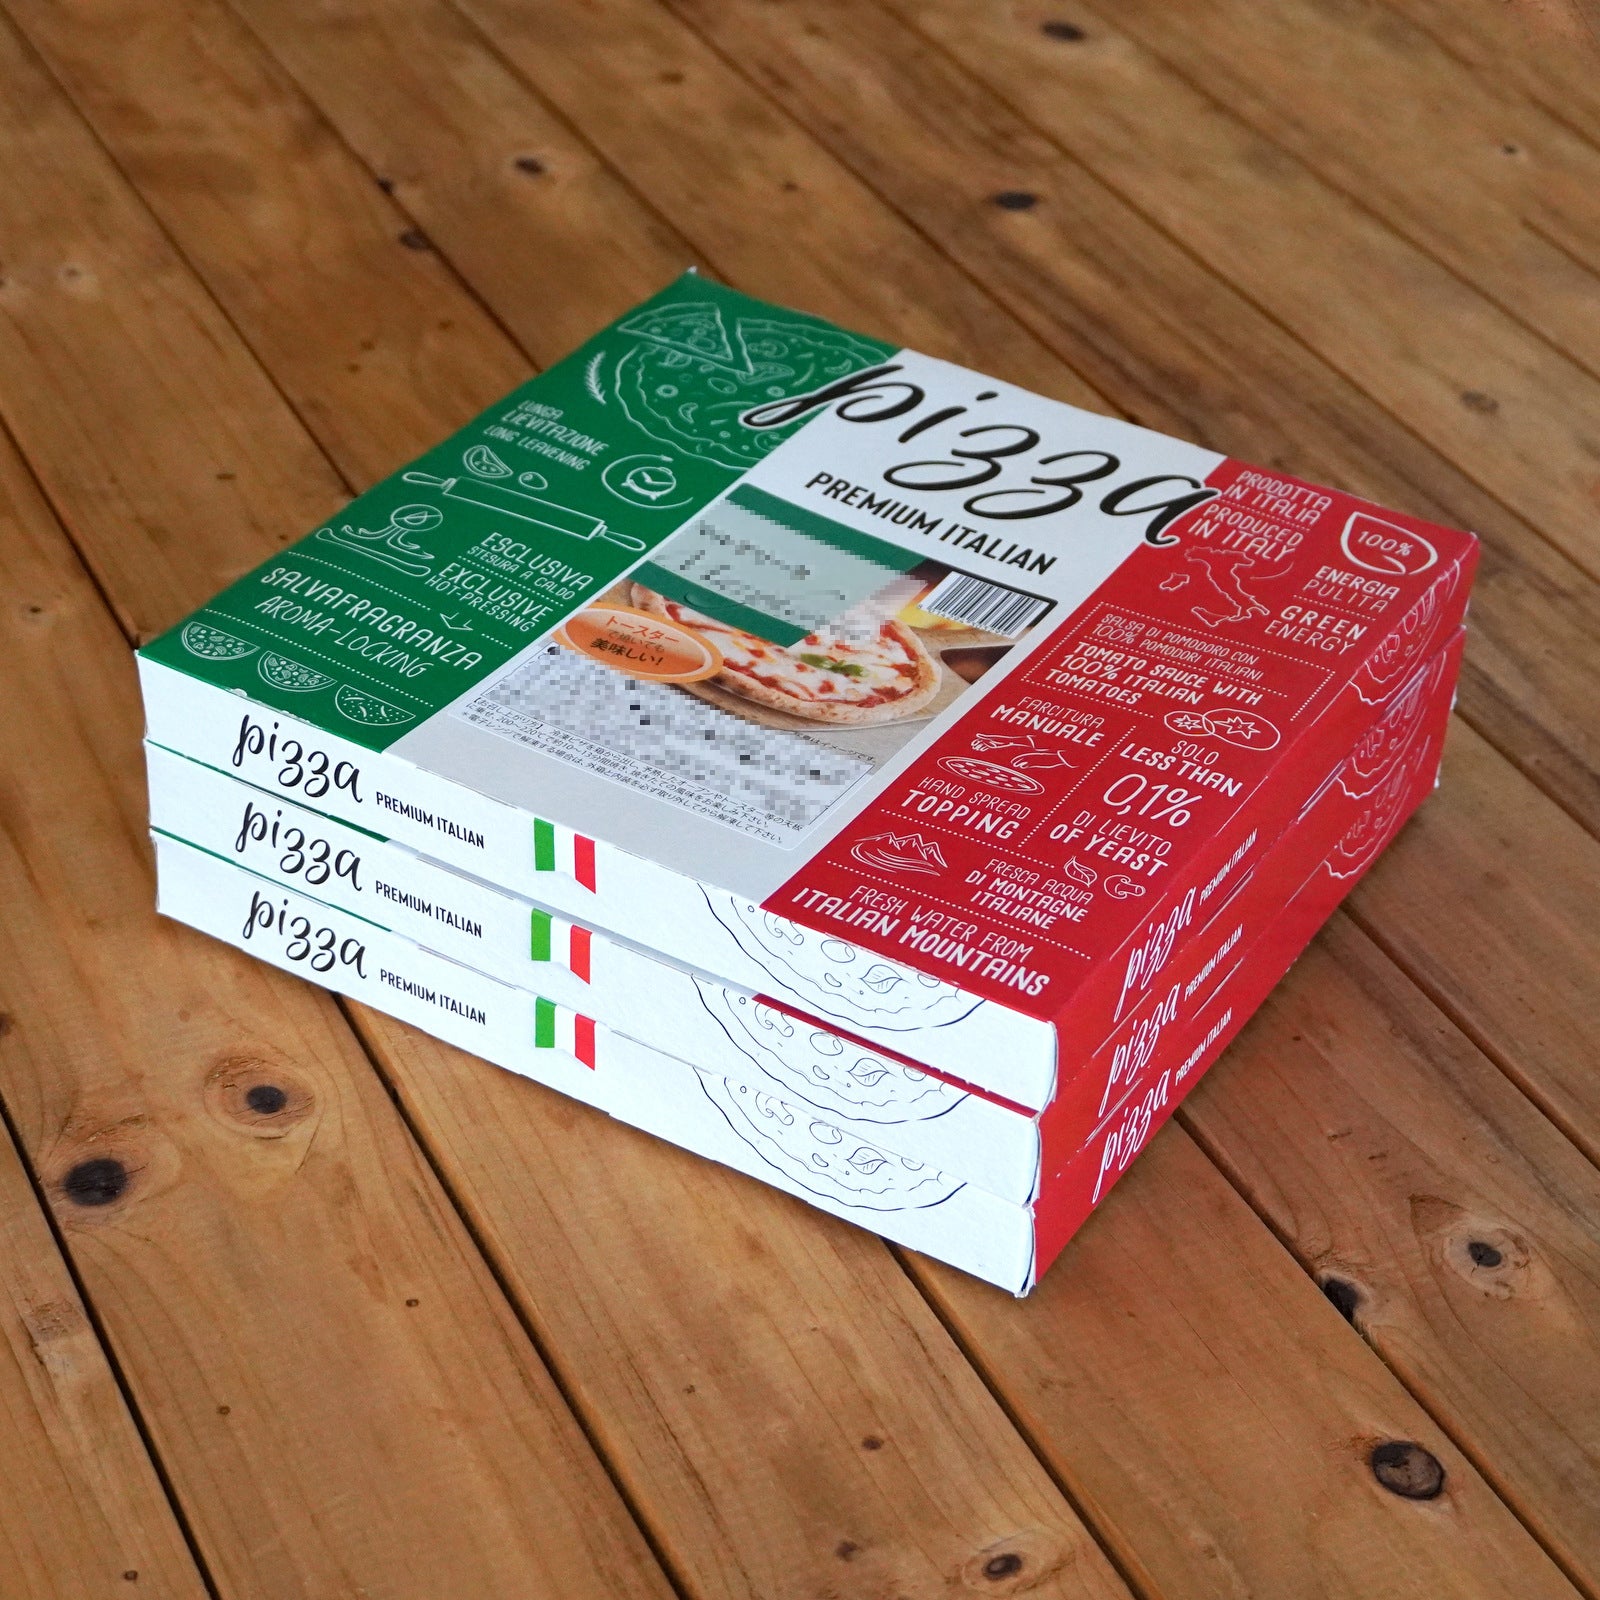 All-Natural Frozen Pizza Quattro Formaggi from Italy (25cm x 3) - Horizon Farms